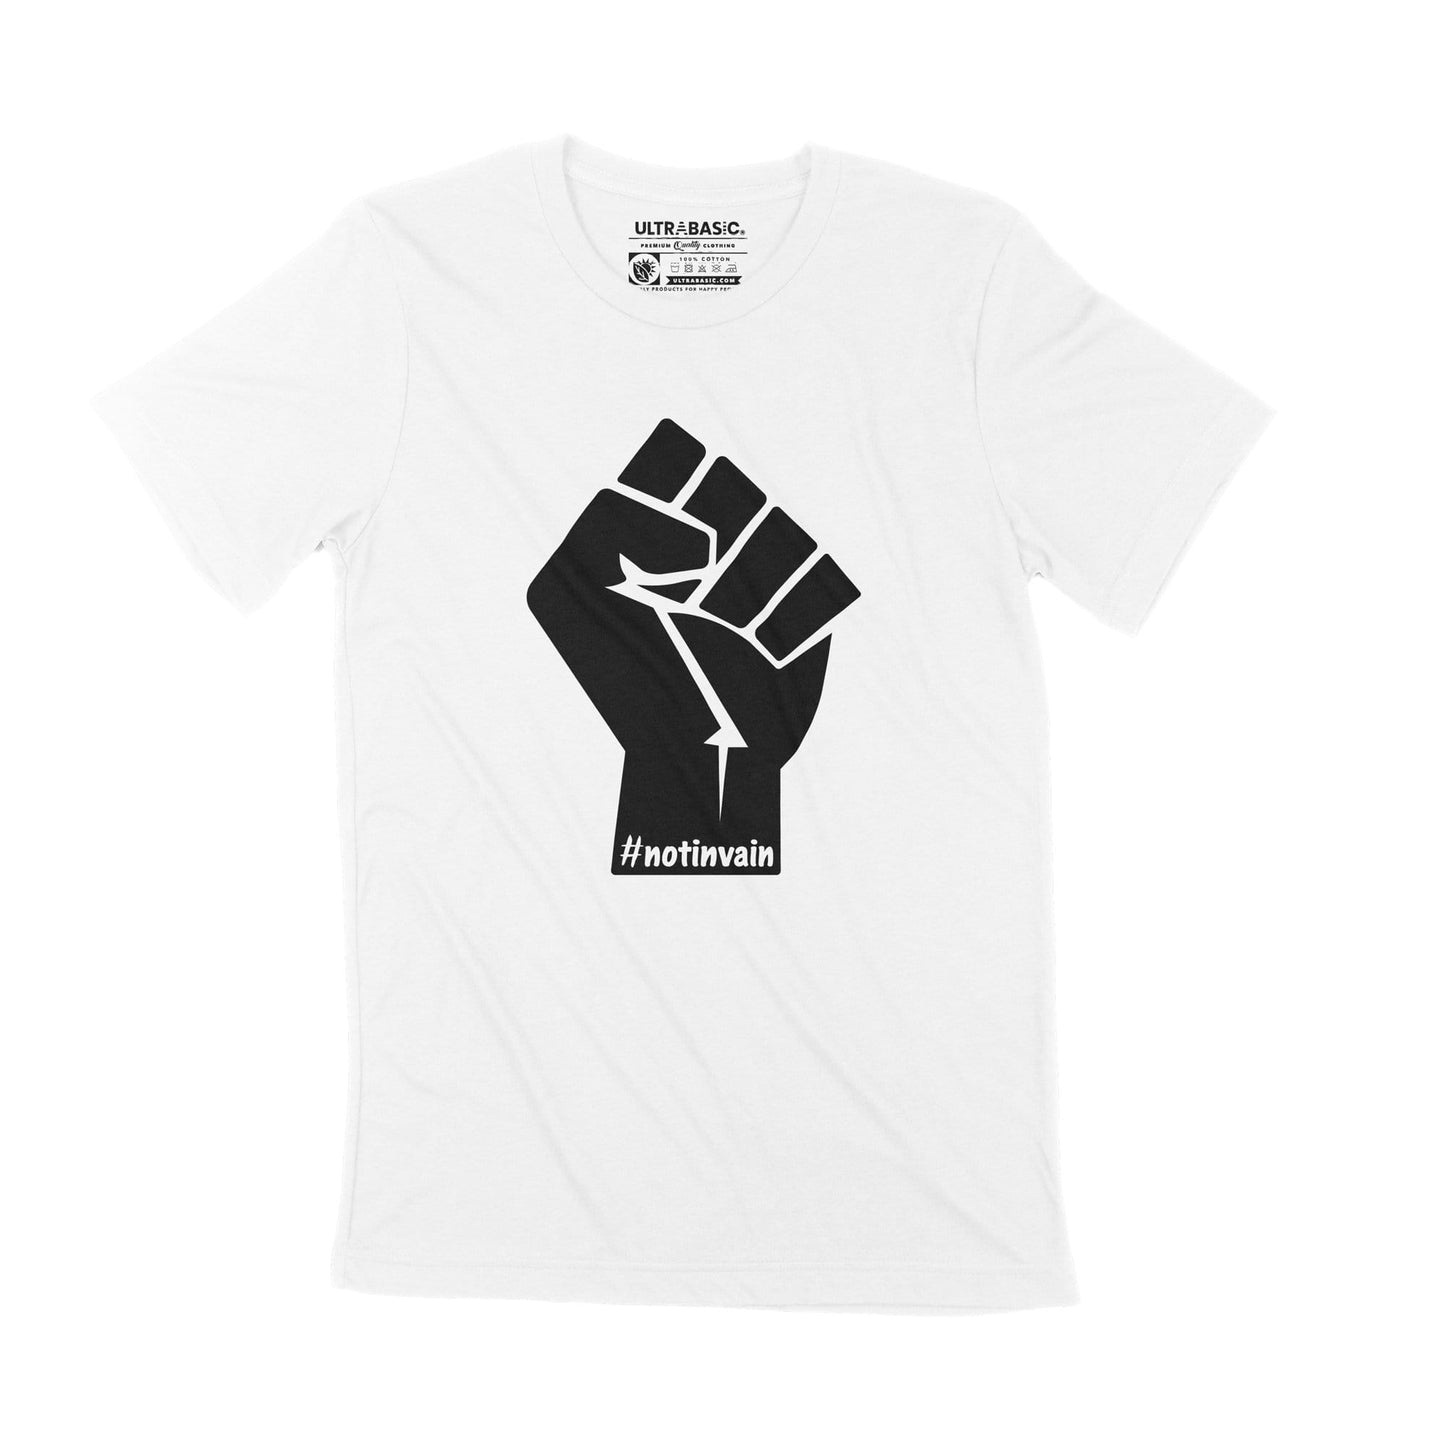 Unisex Adult T-Shirt Notinvain Black Lives Matter BLM Equal Rights Shirt